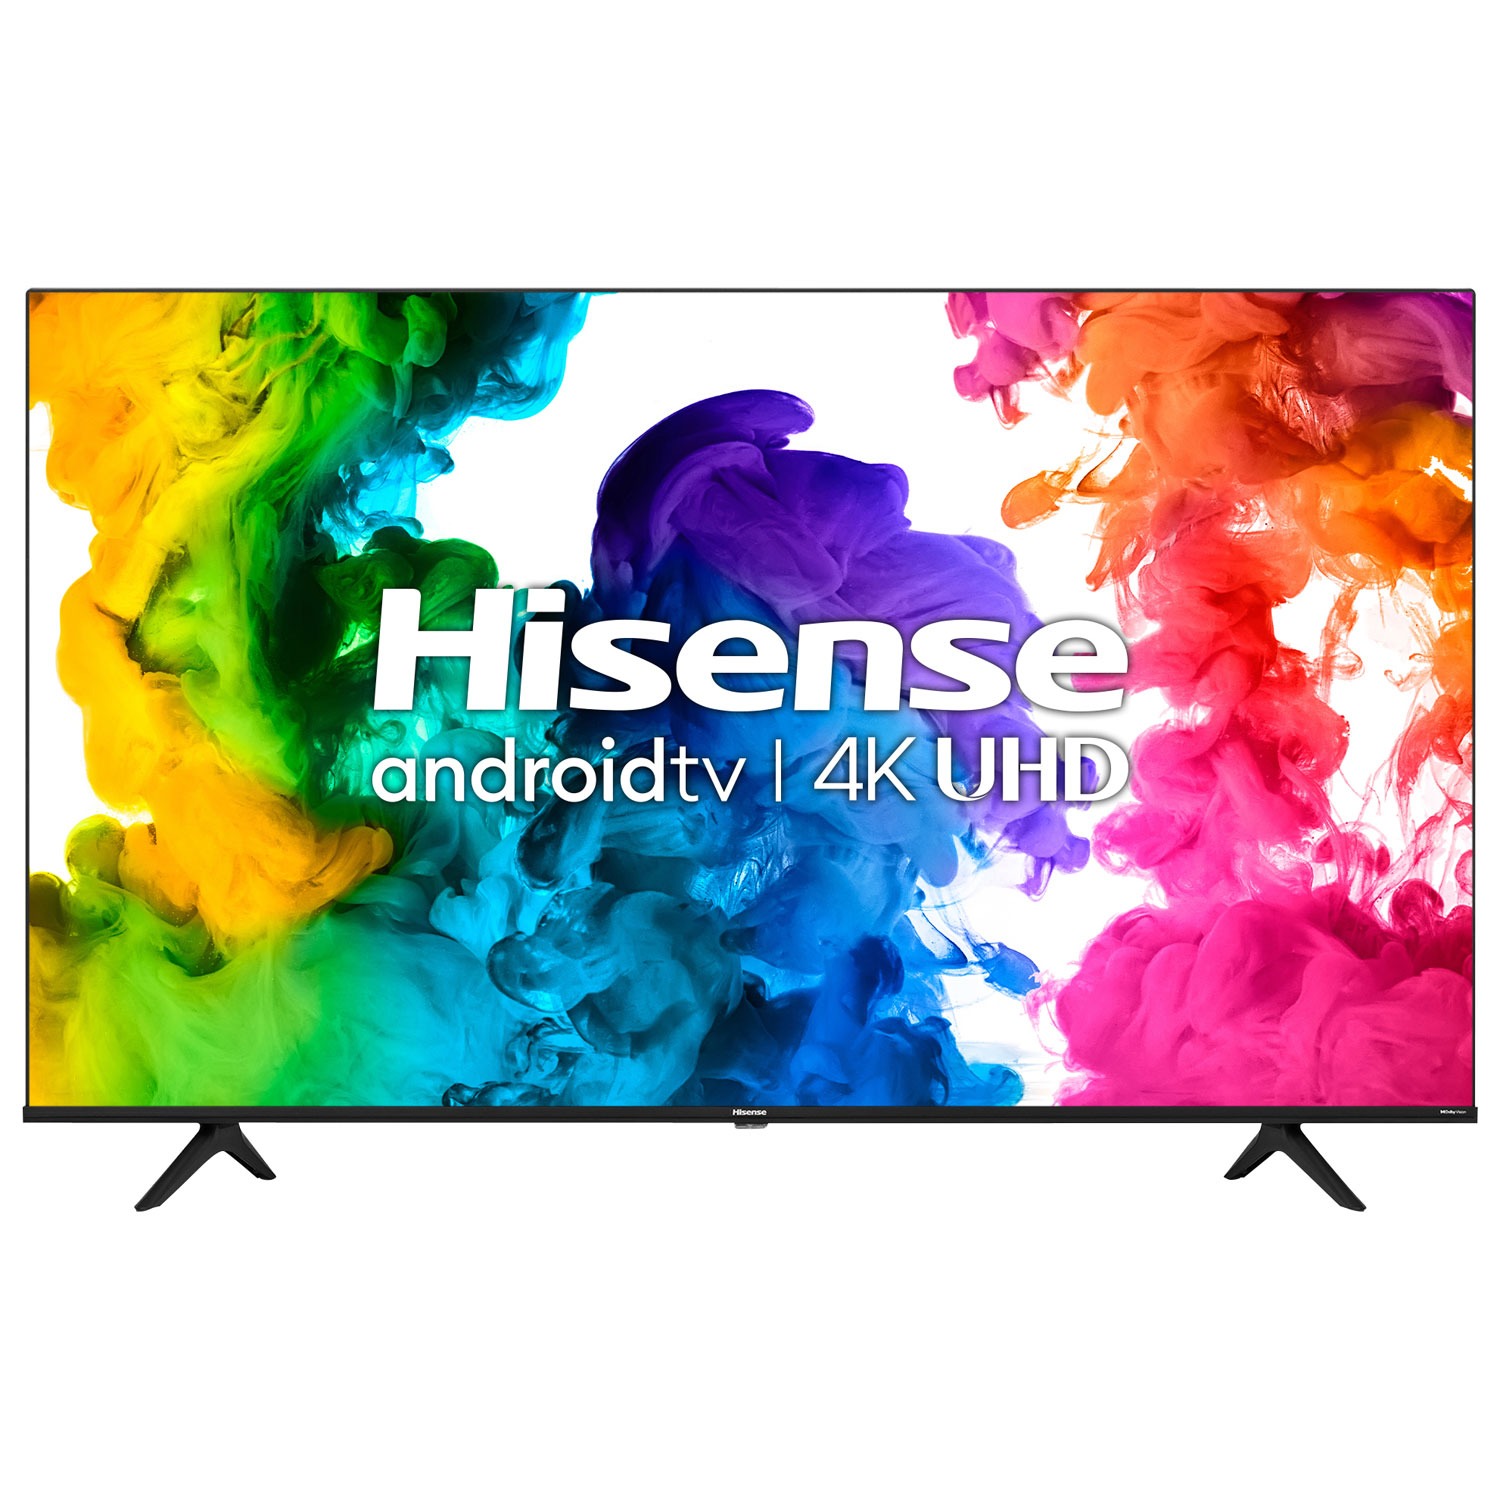 Hisense 65" 4K UHD HDR LED Android Smart TV (65A68G) - 2021